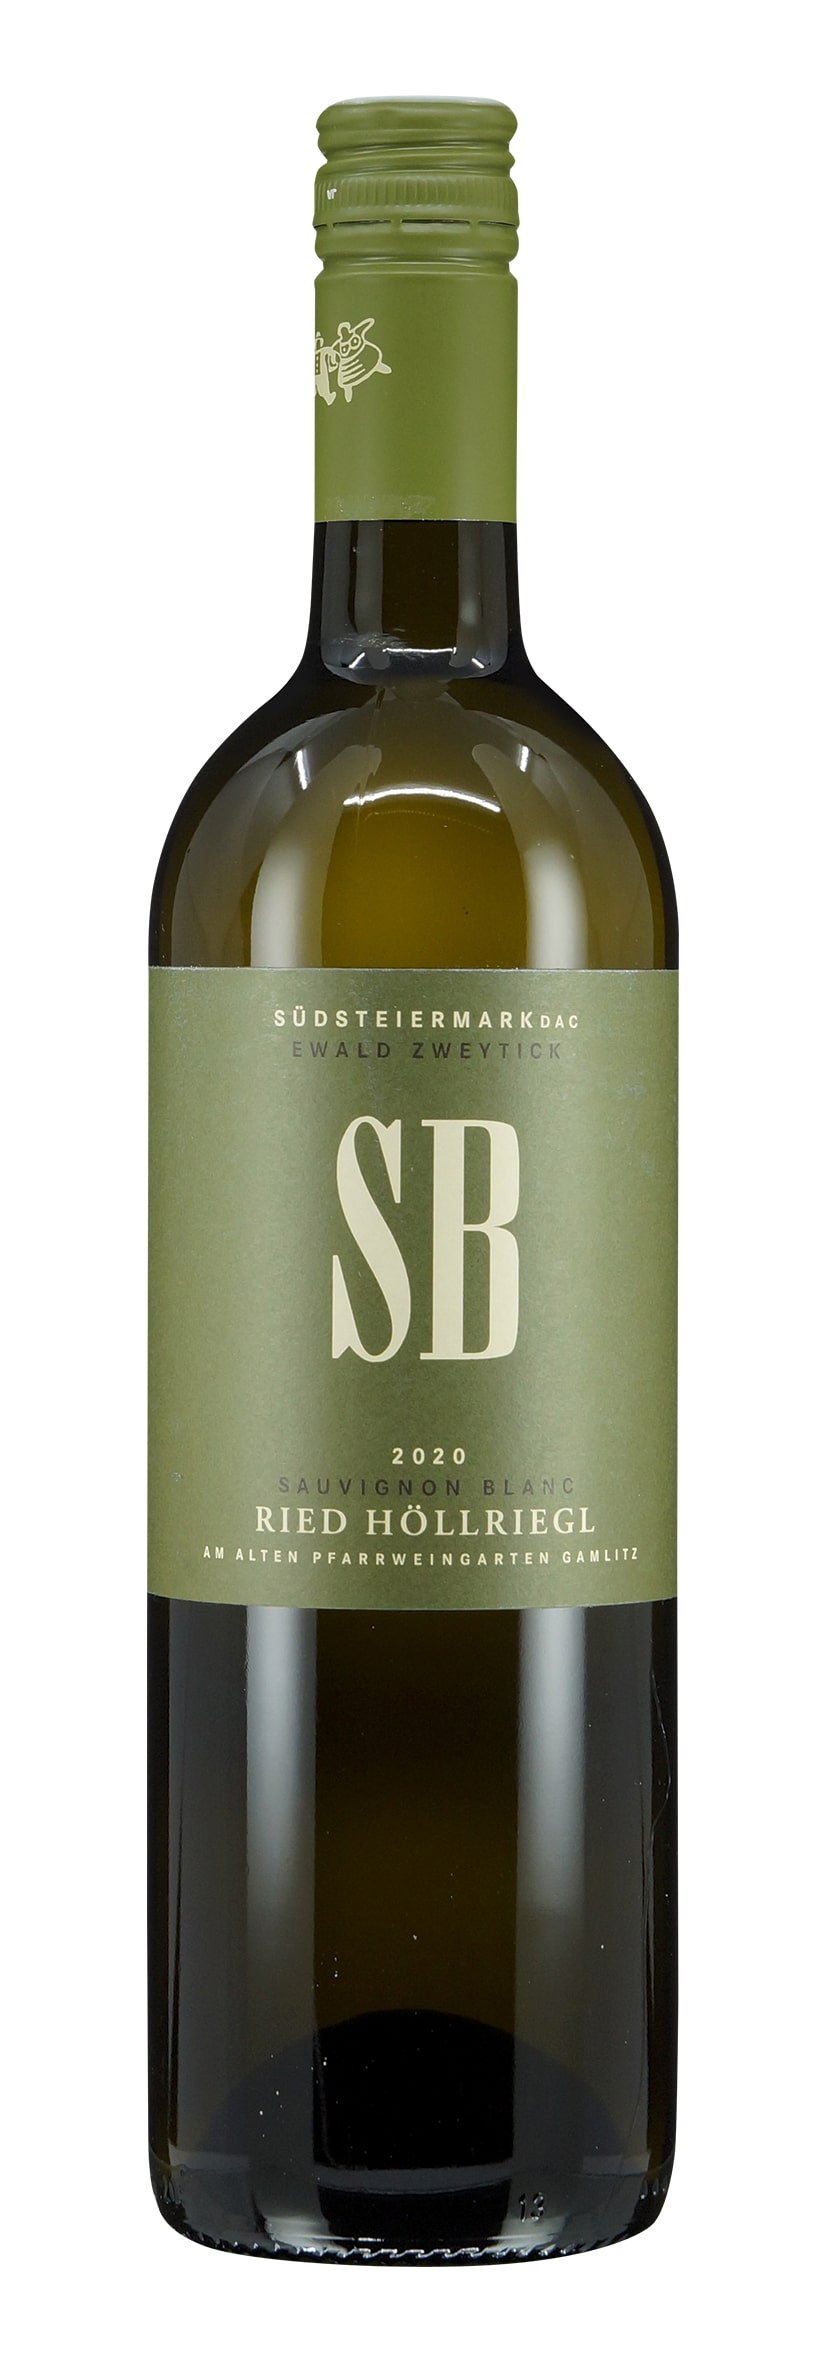 Südsteiermark DAC Ried Höllriegl am Alten Pfarrweingarten Gamlitz Sauvignon Blanc "SB"   2020